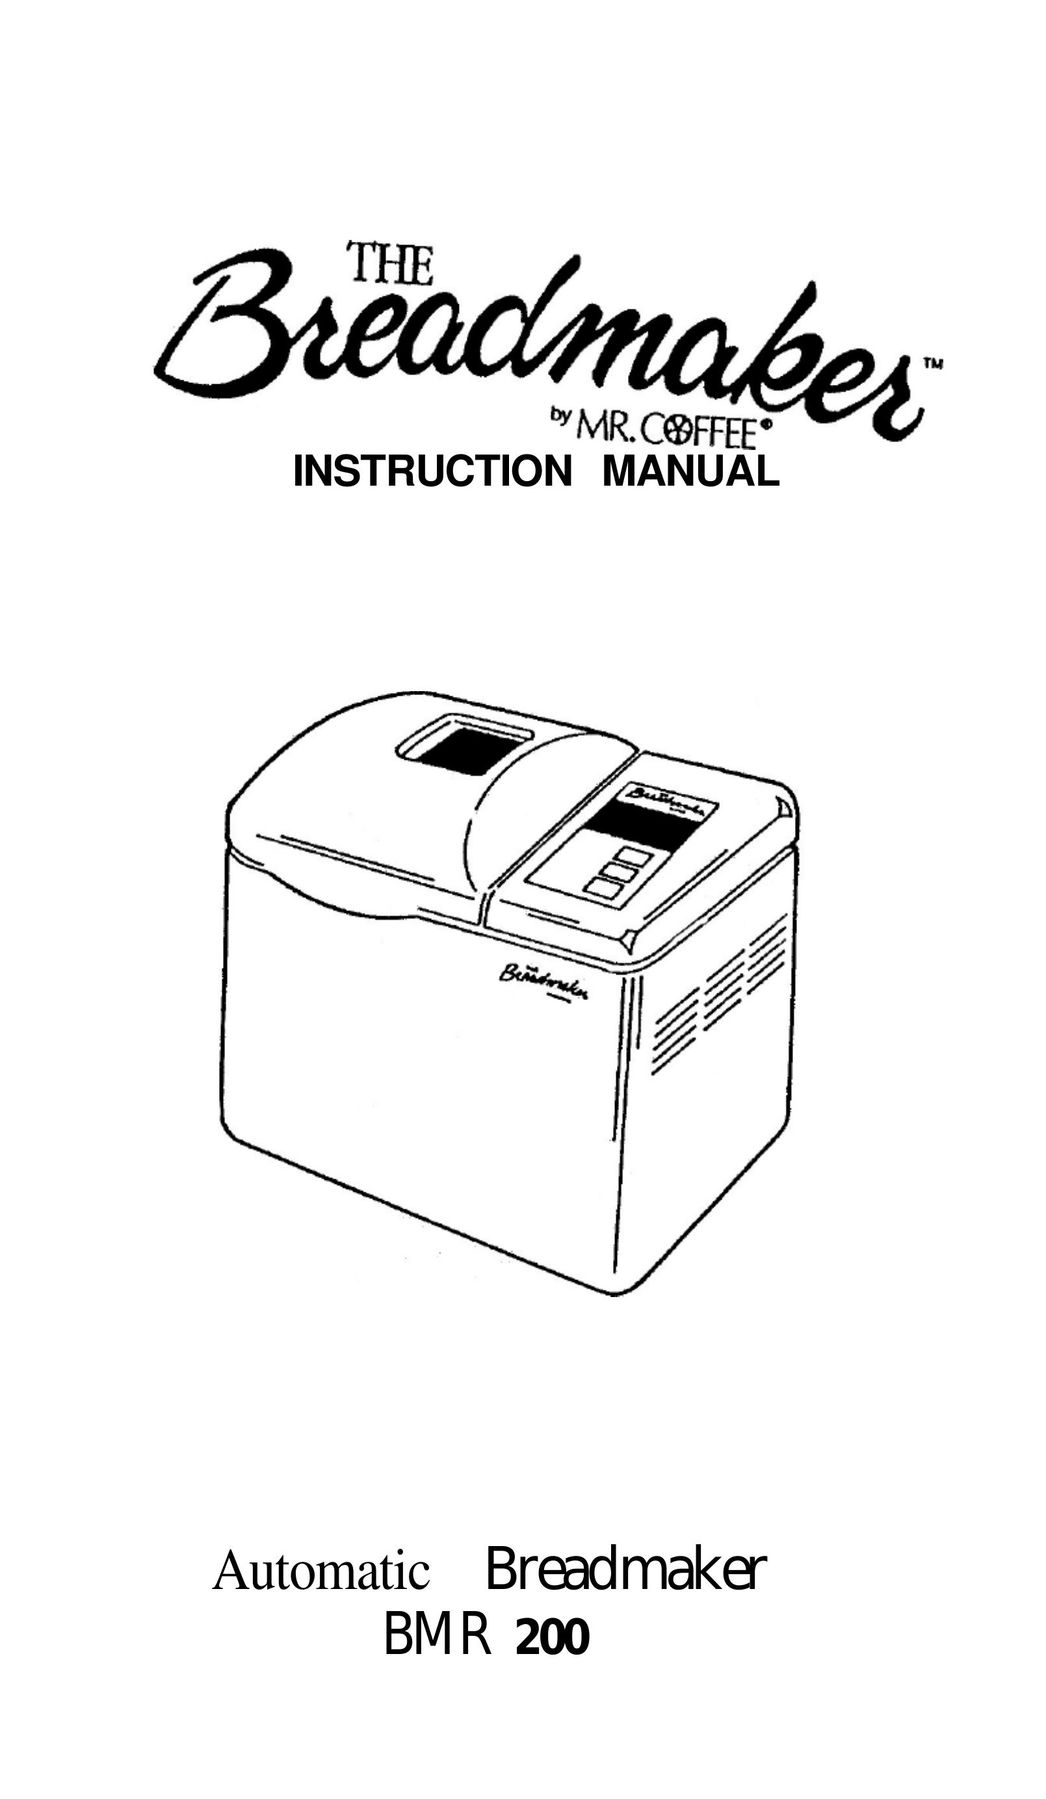 Mr. Coffee BMR 200 Bread Maker User Manual